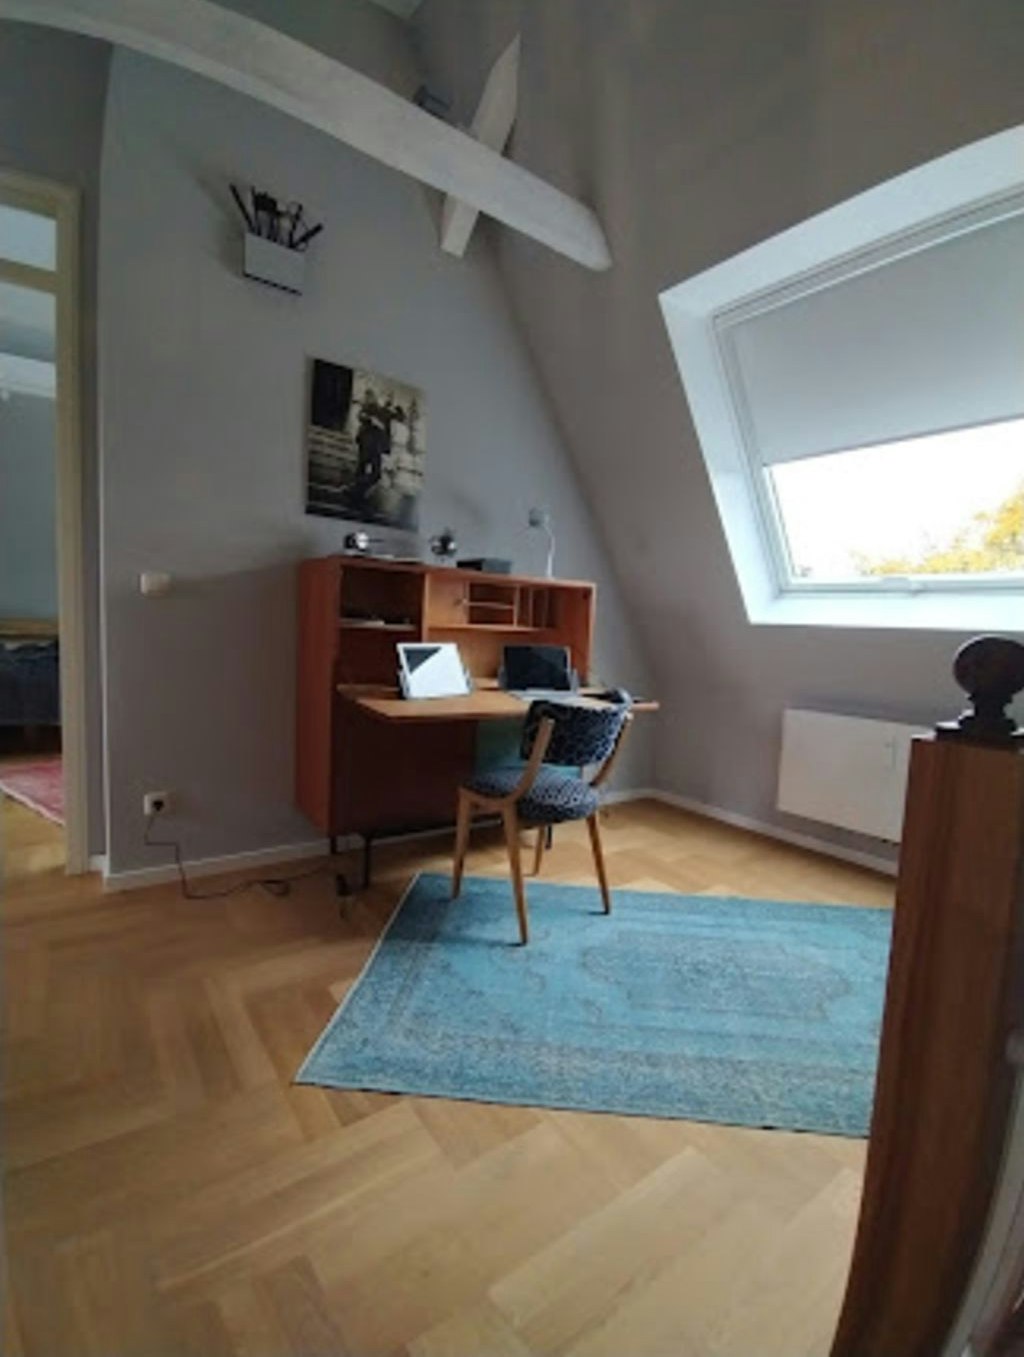 Villa in Stade near Hamburg: Fully equipped, beautiful apartment